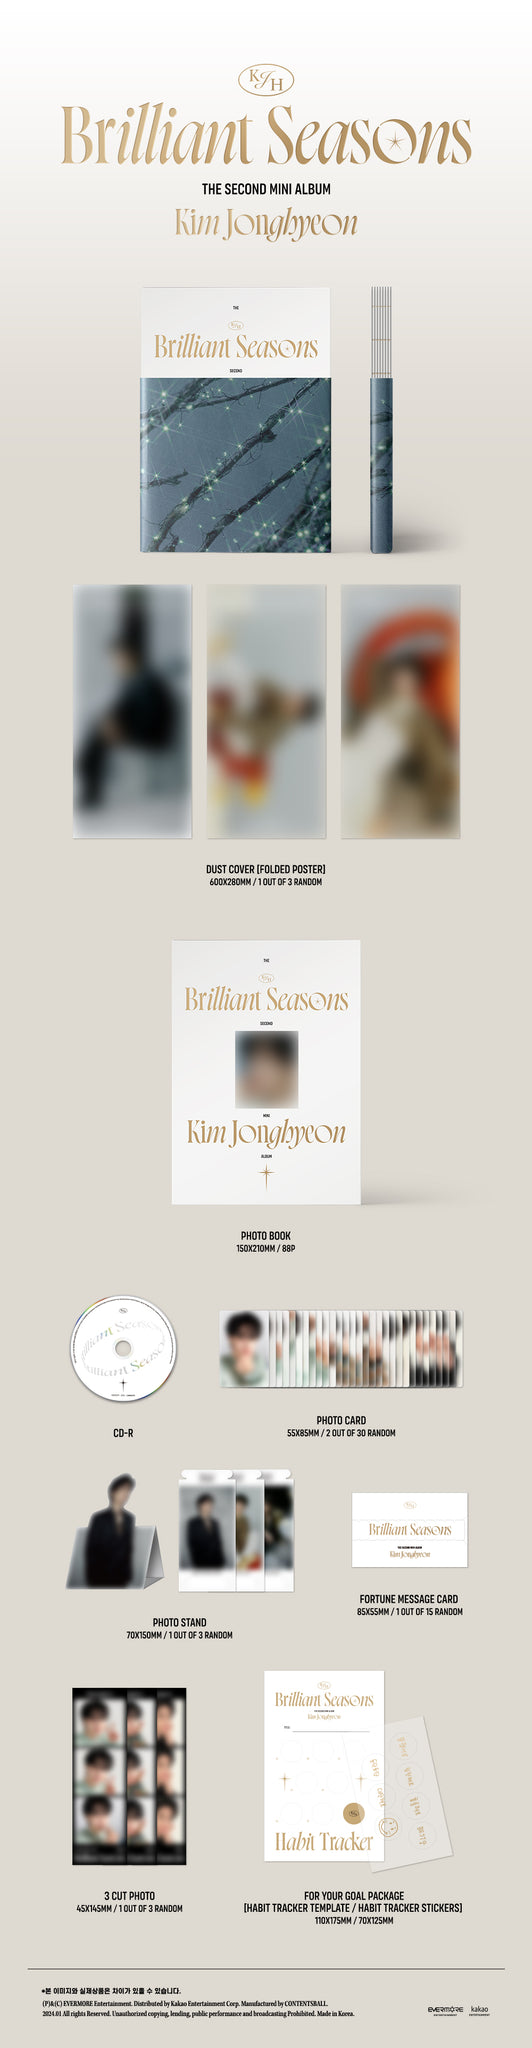 Kim Jonghyeon - Brilliant Seasons